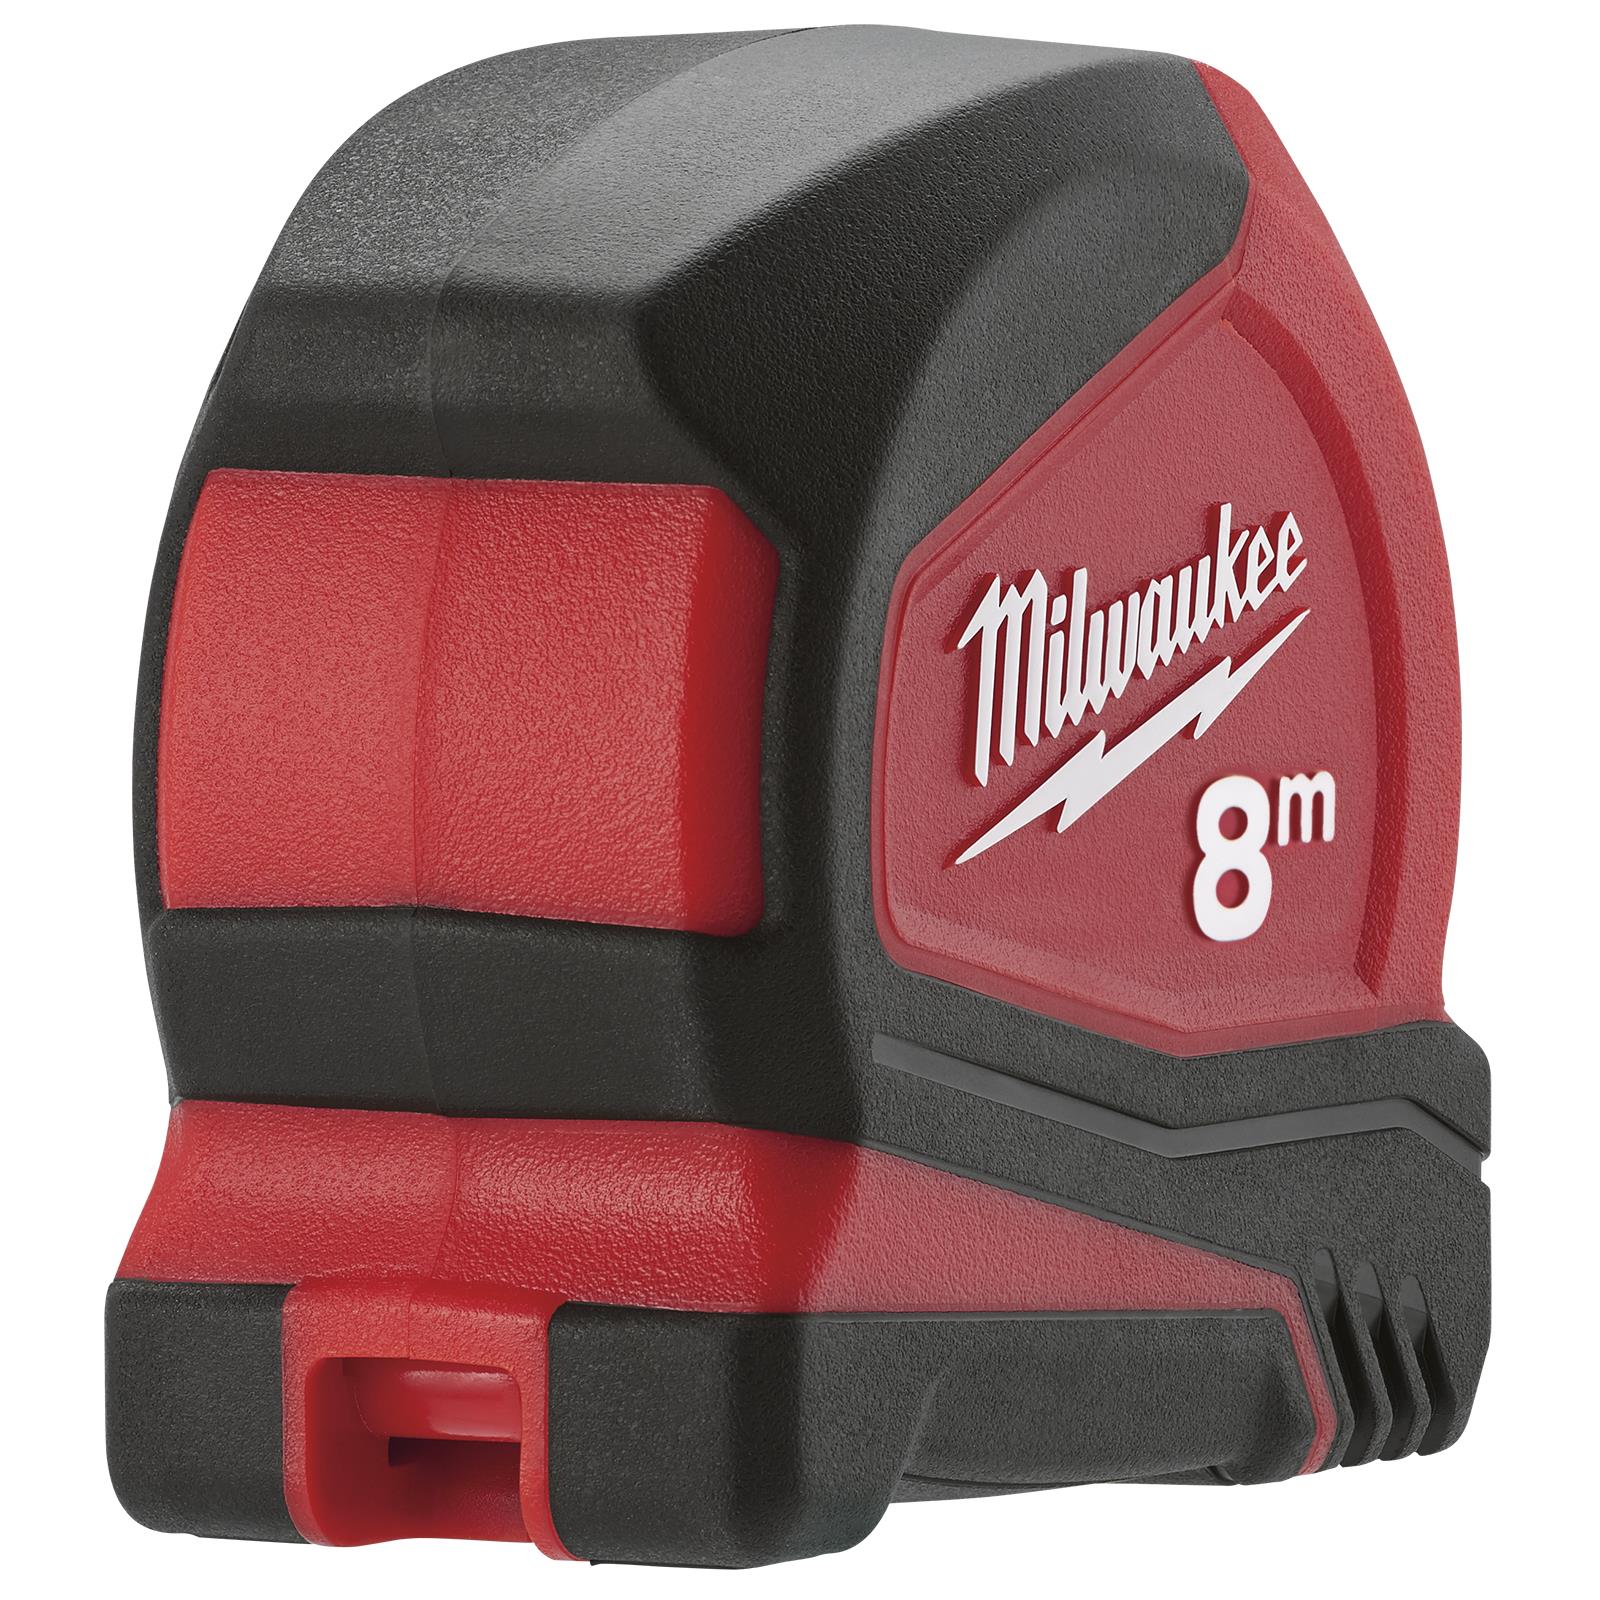 Milwaukee Tape Measure 8m Metric Pro Compact Pocket Tape 25mm Blade Width